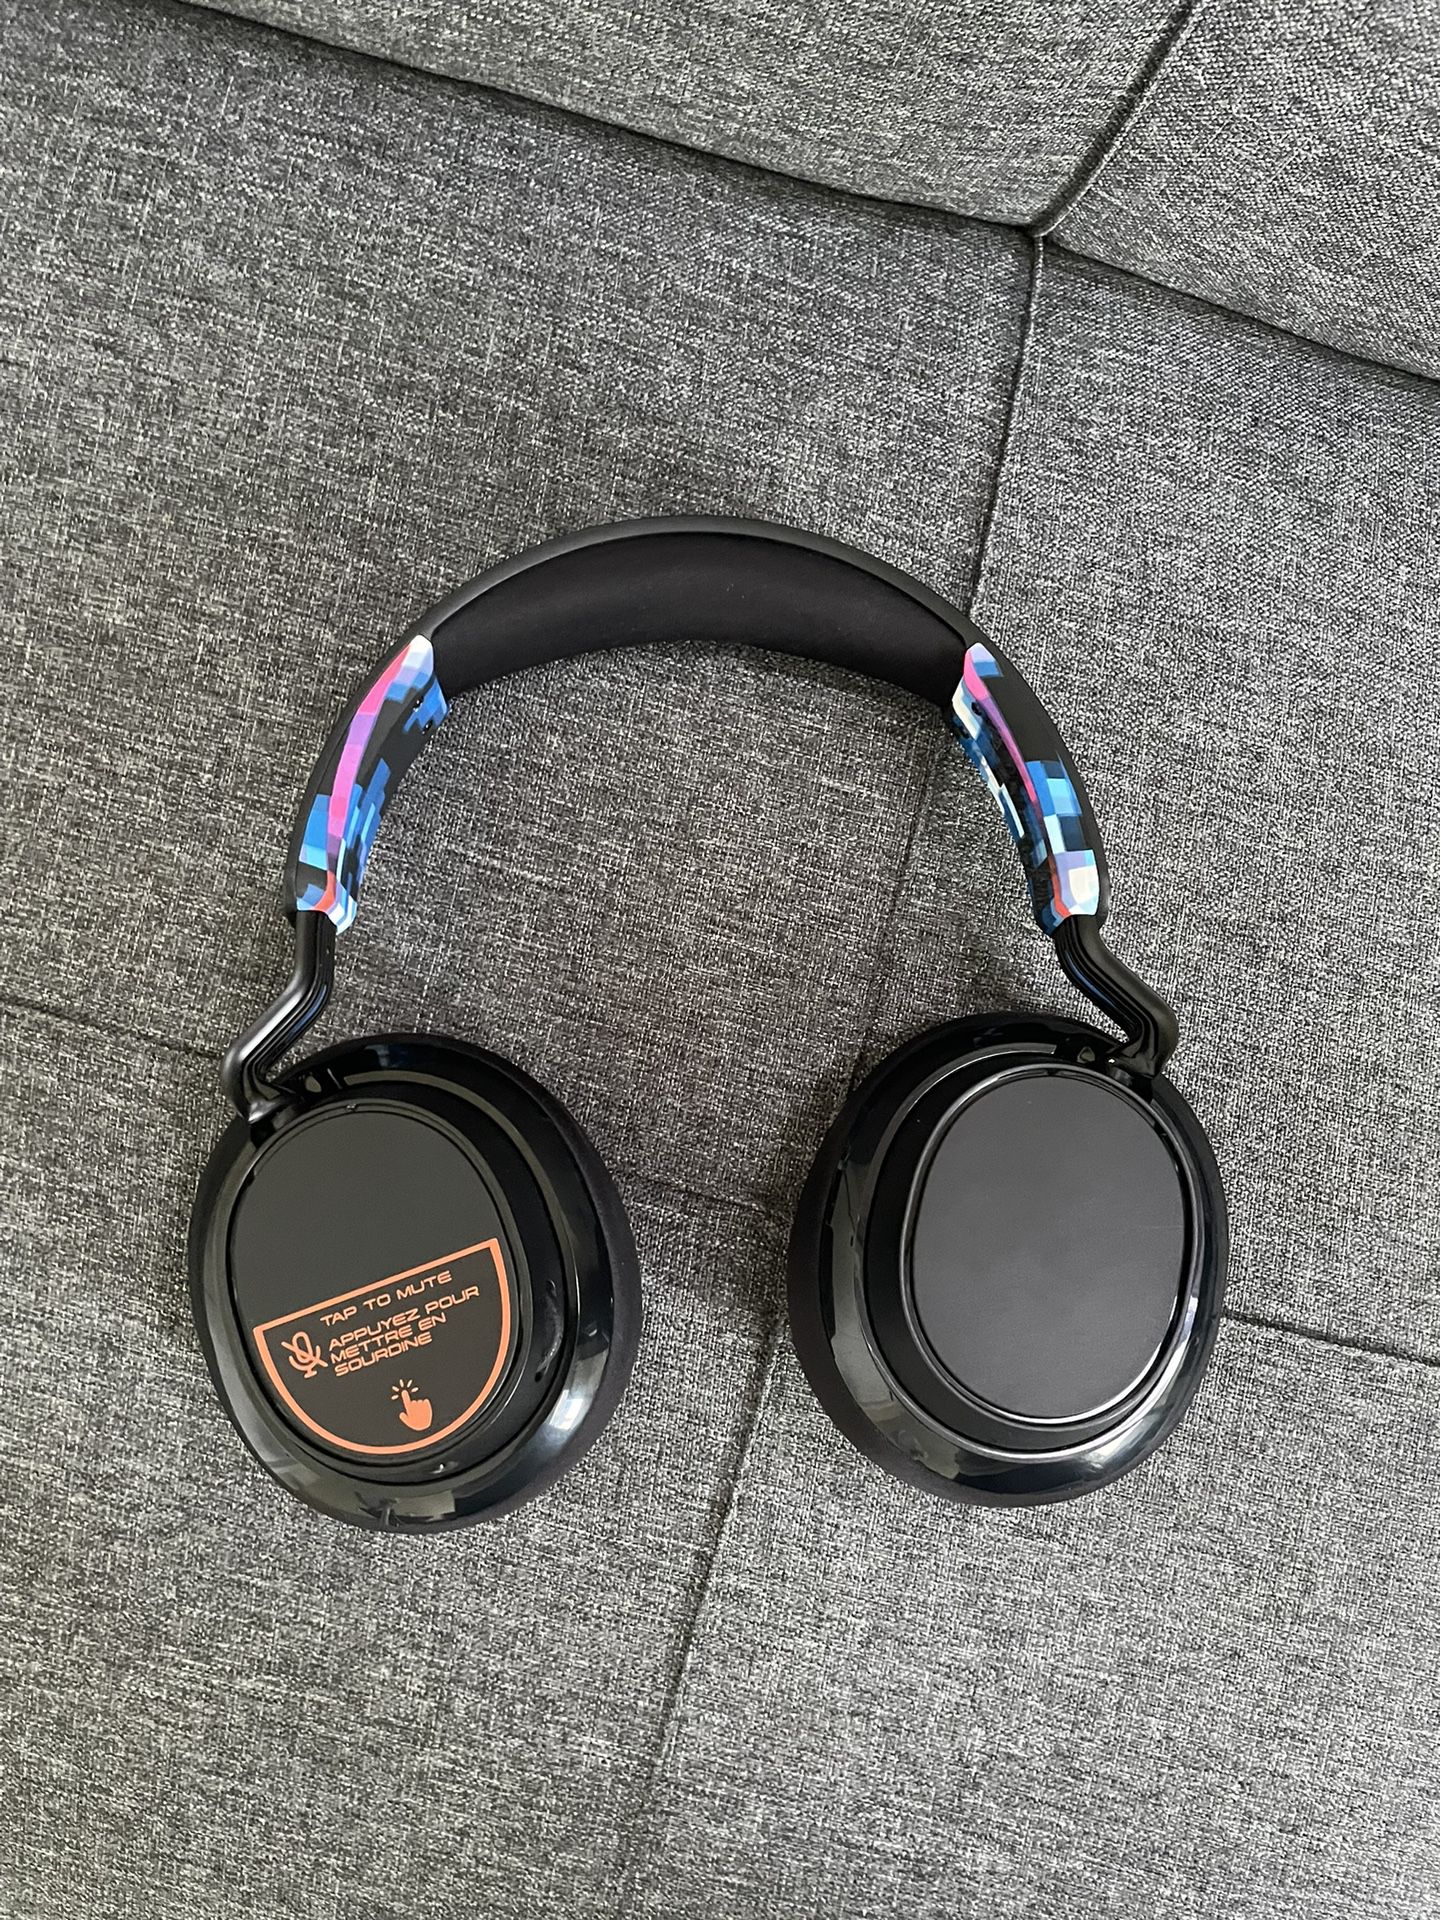 SYLR Pro Wired Headset/Headphones Skullcandy